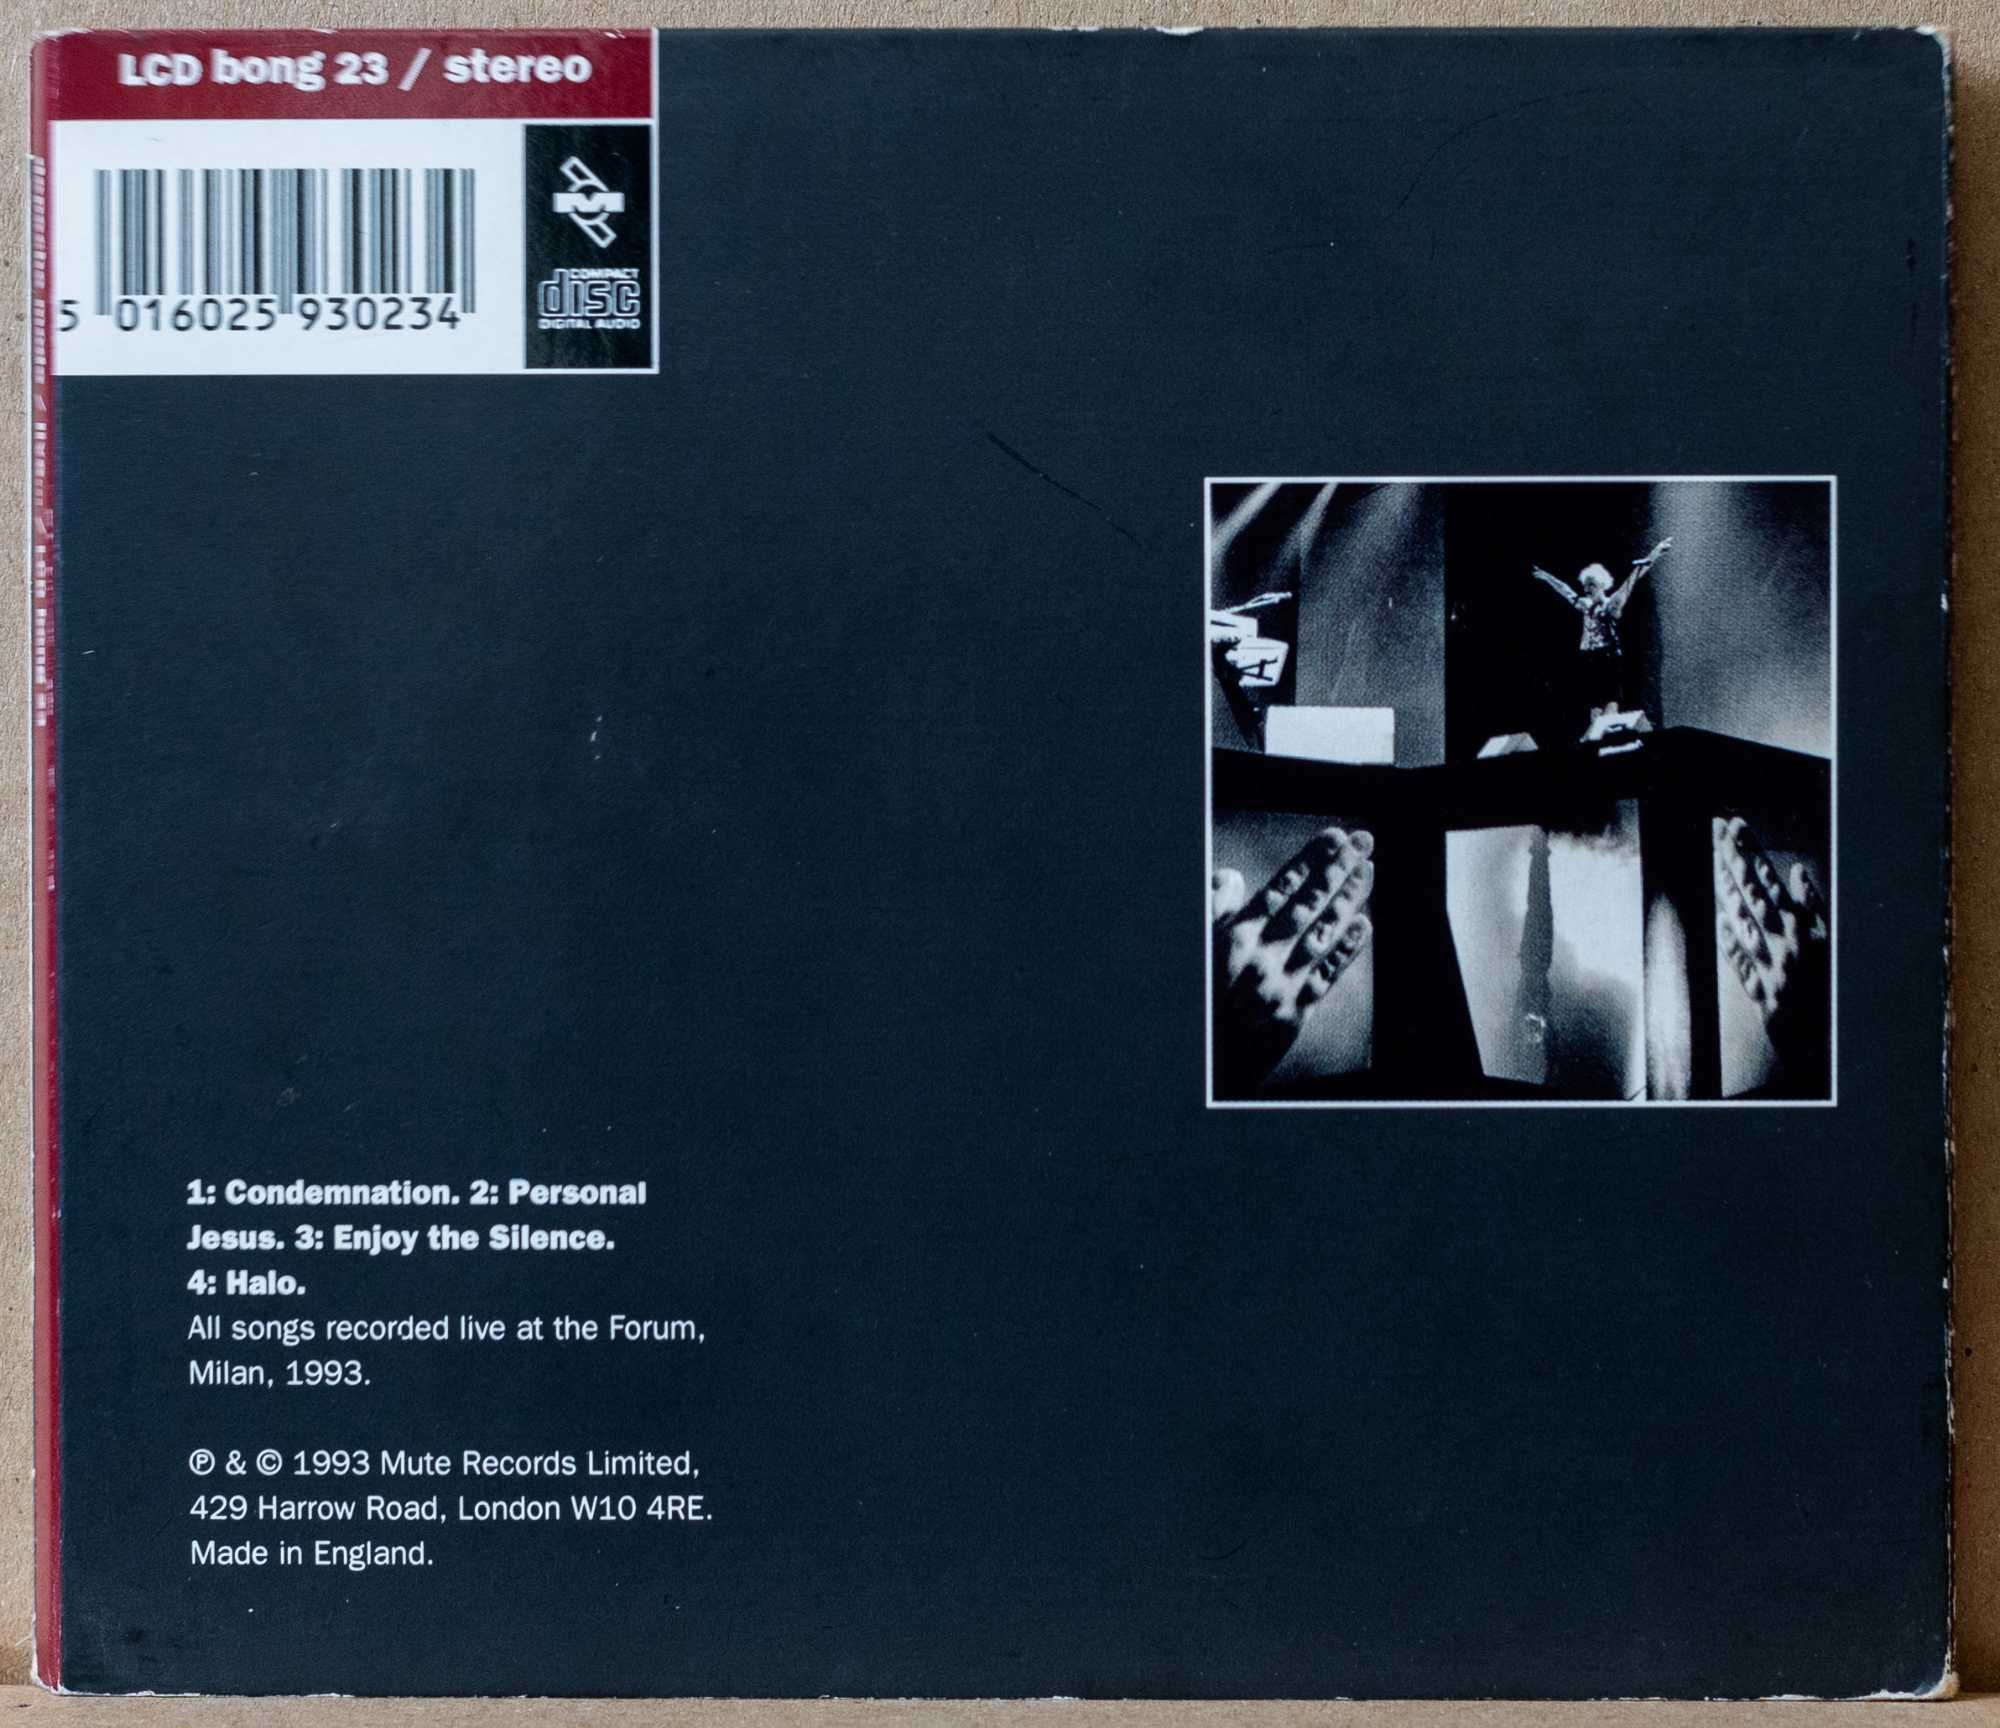 Depeche Mode - Condemnation - LCDBong23